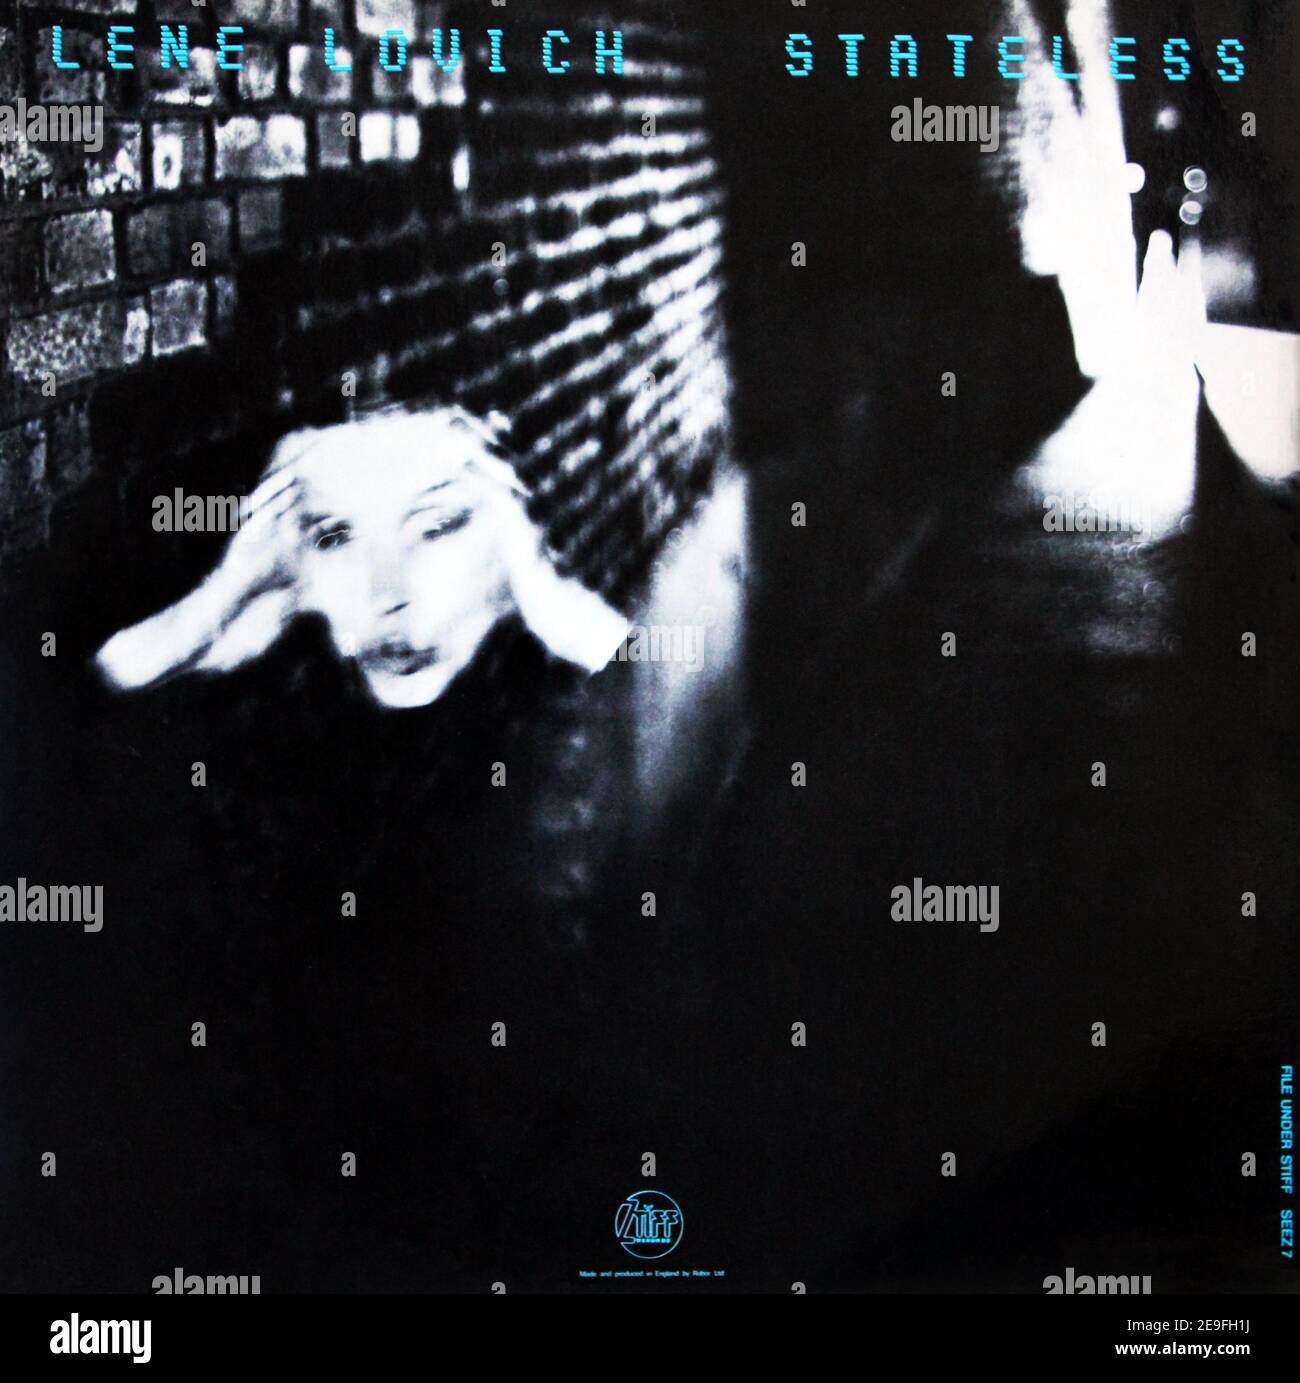 Lene Lovich: 1978. LP back cover 'Stateless' Stock Photo